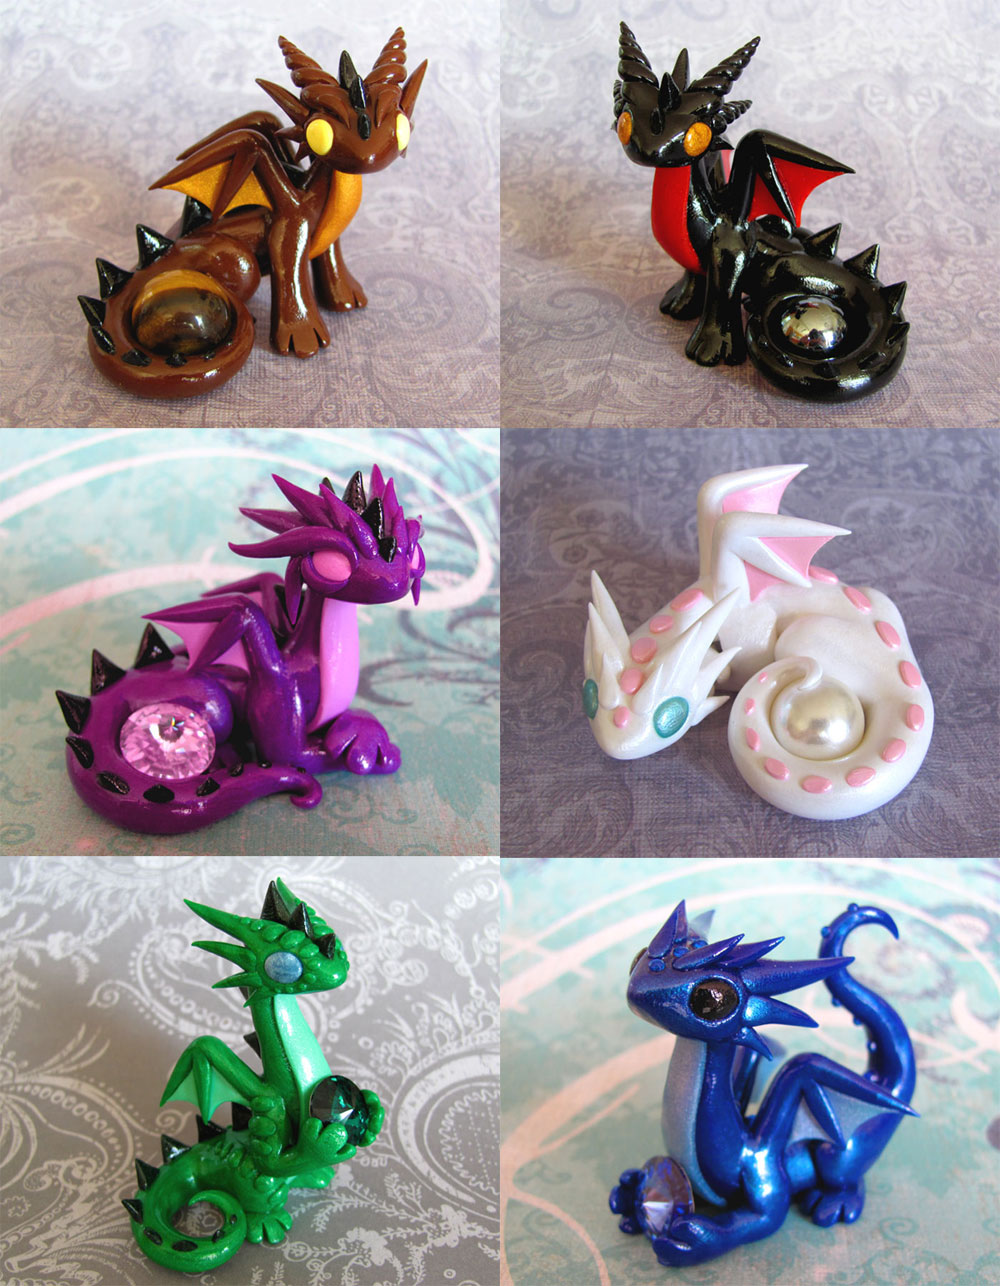 Random Gem Dragons by DragonsAndBeasties on DeviantArt